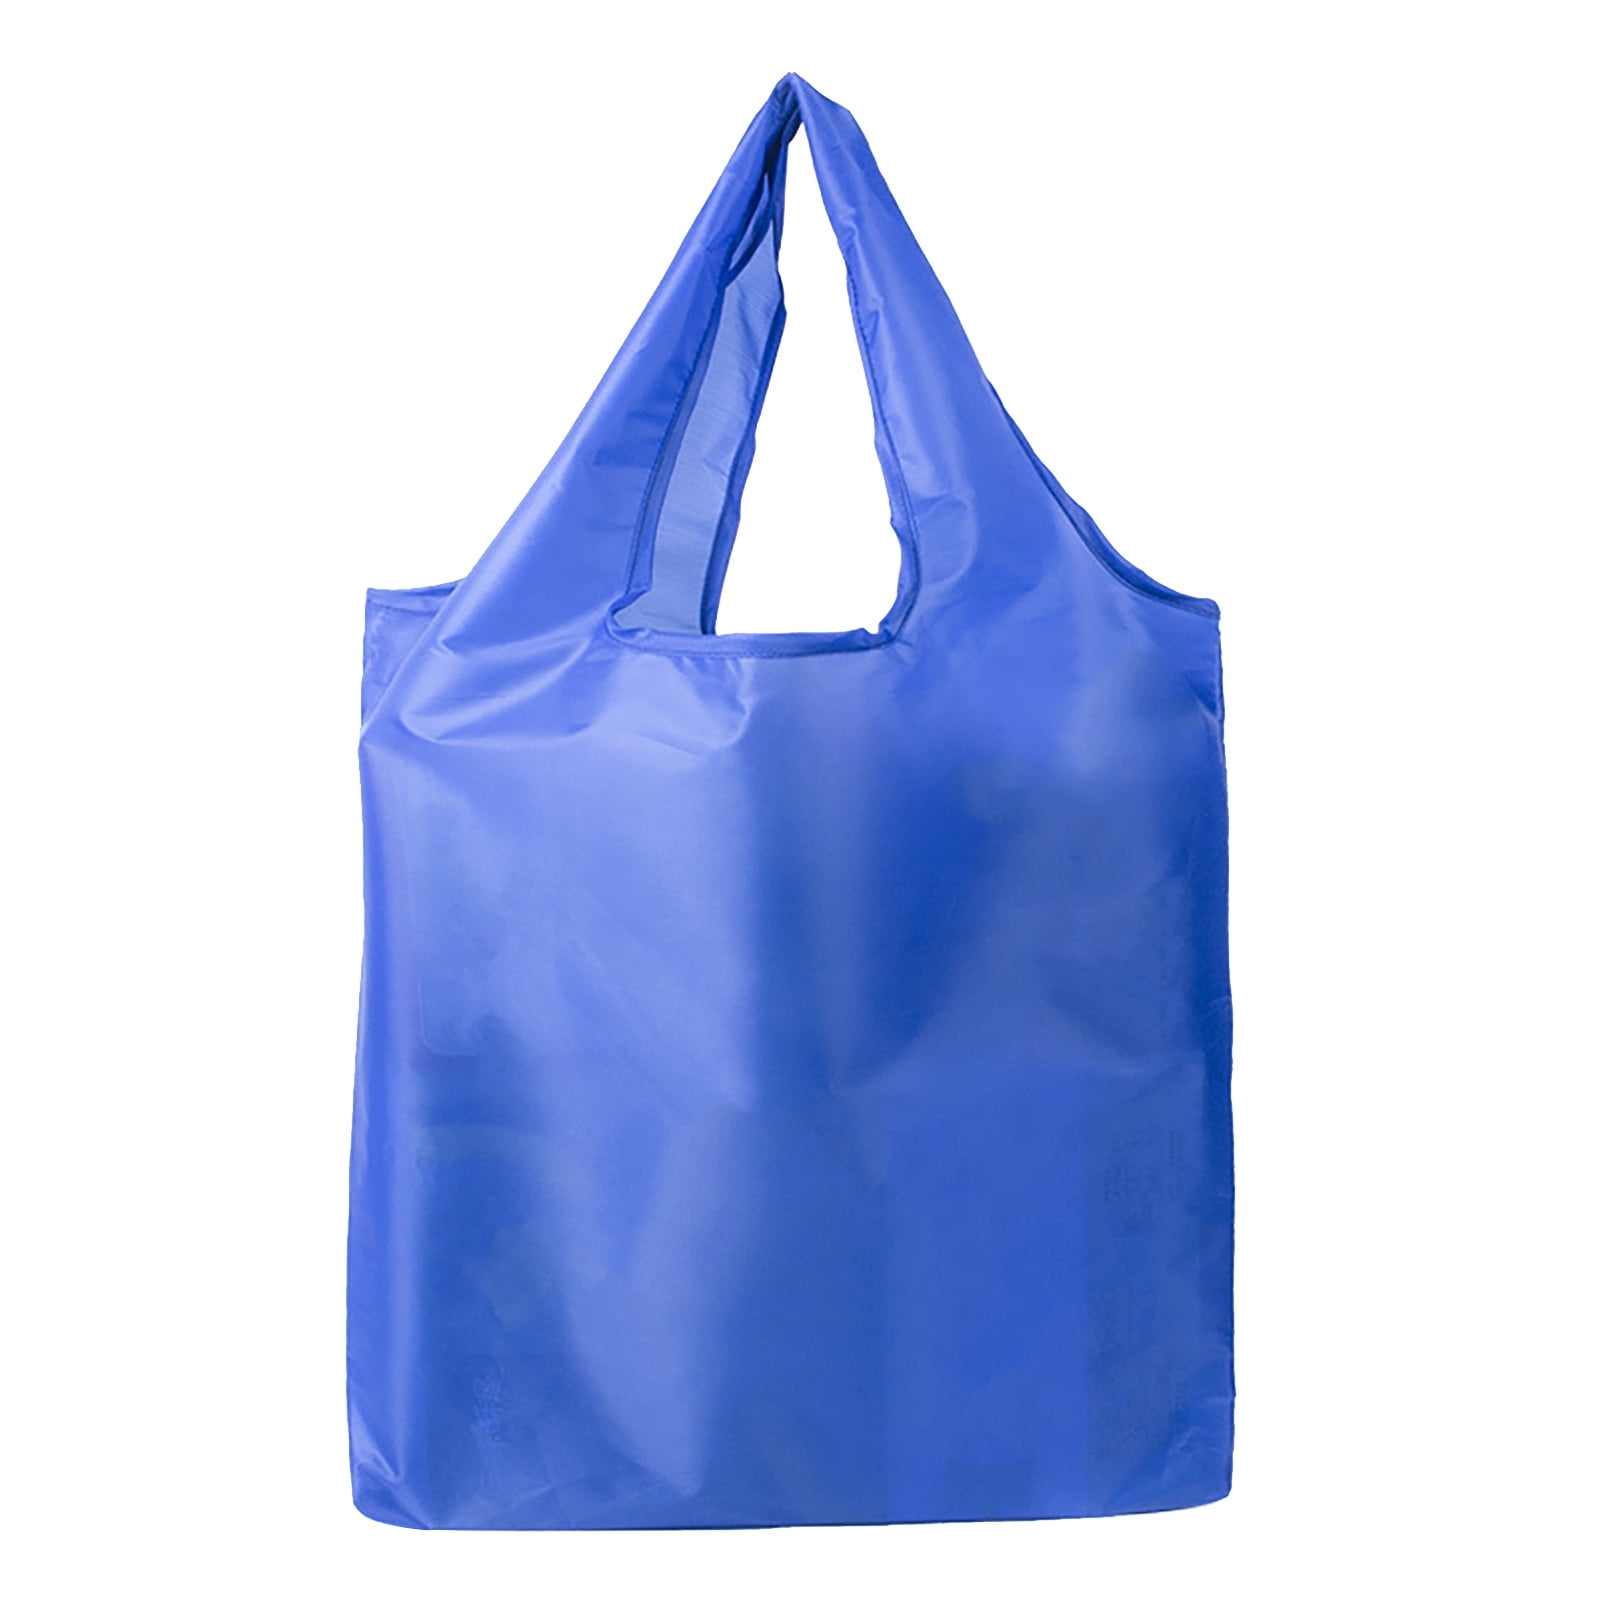 REI Recreational Equipment Inc Pouch Bag Lot Of 2 | eBay